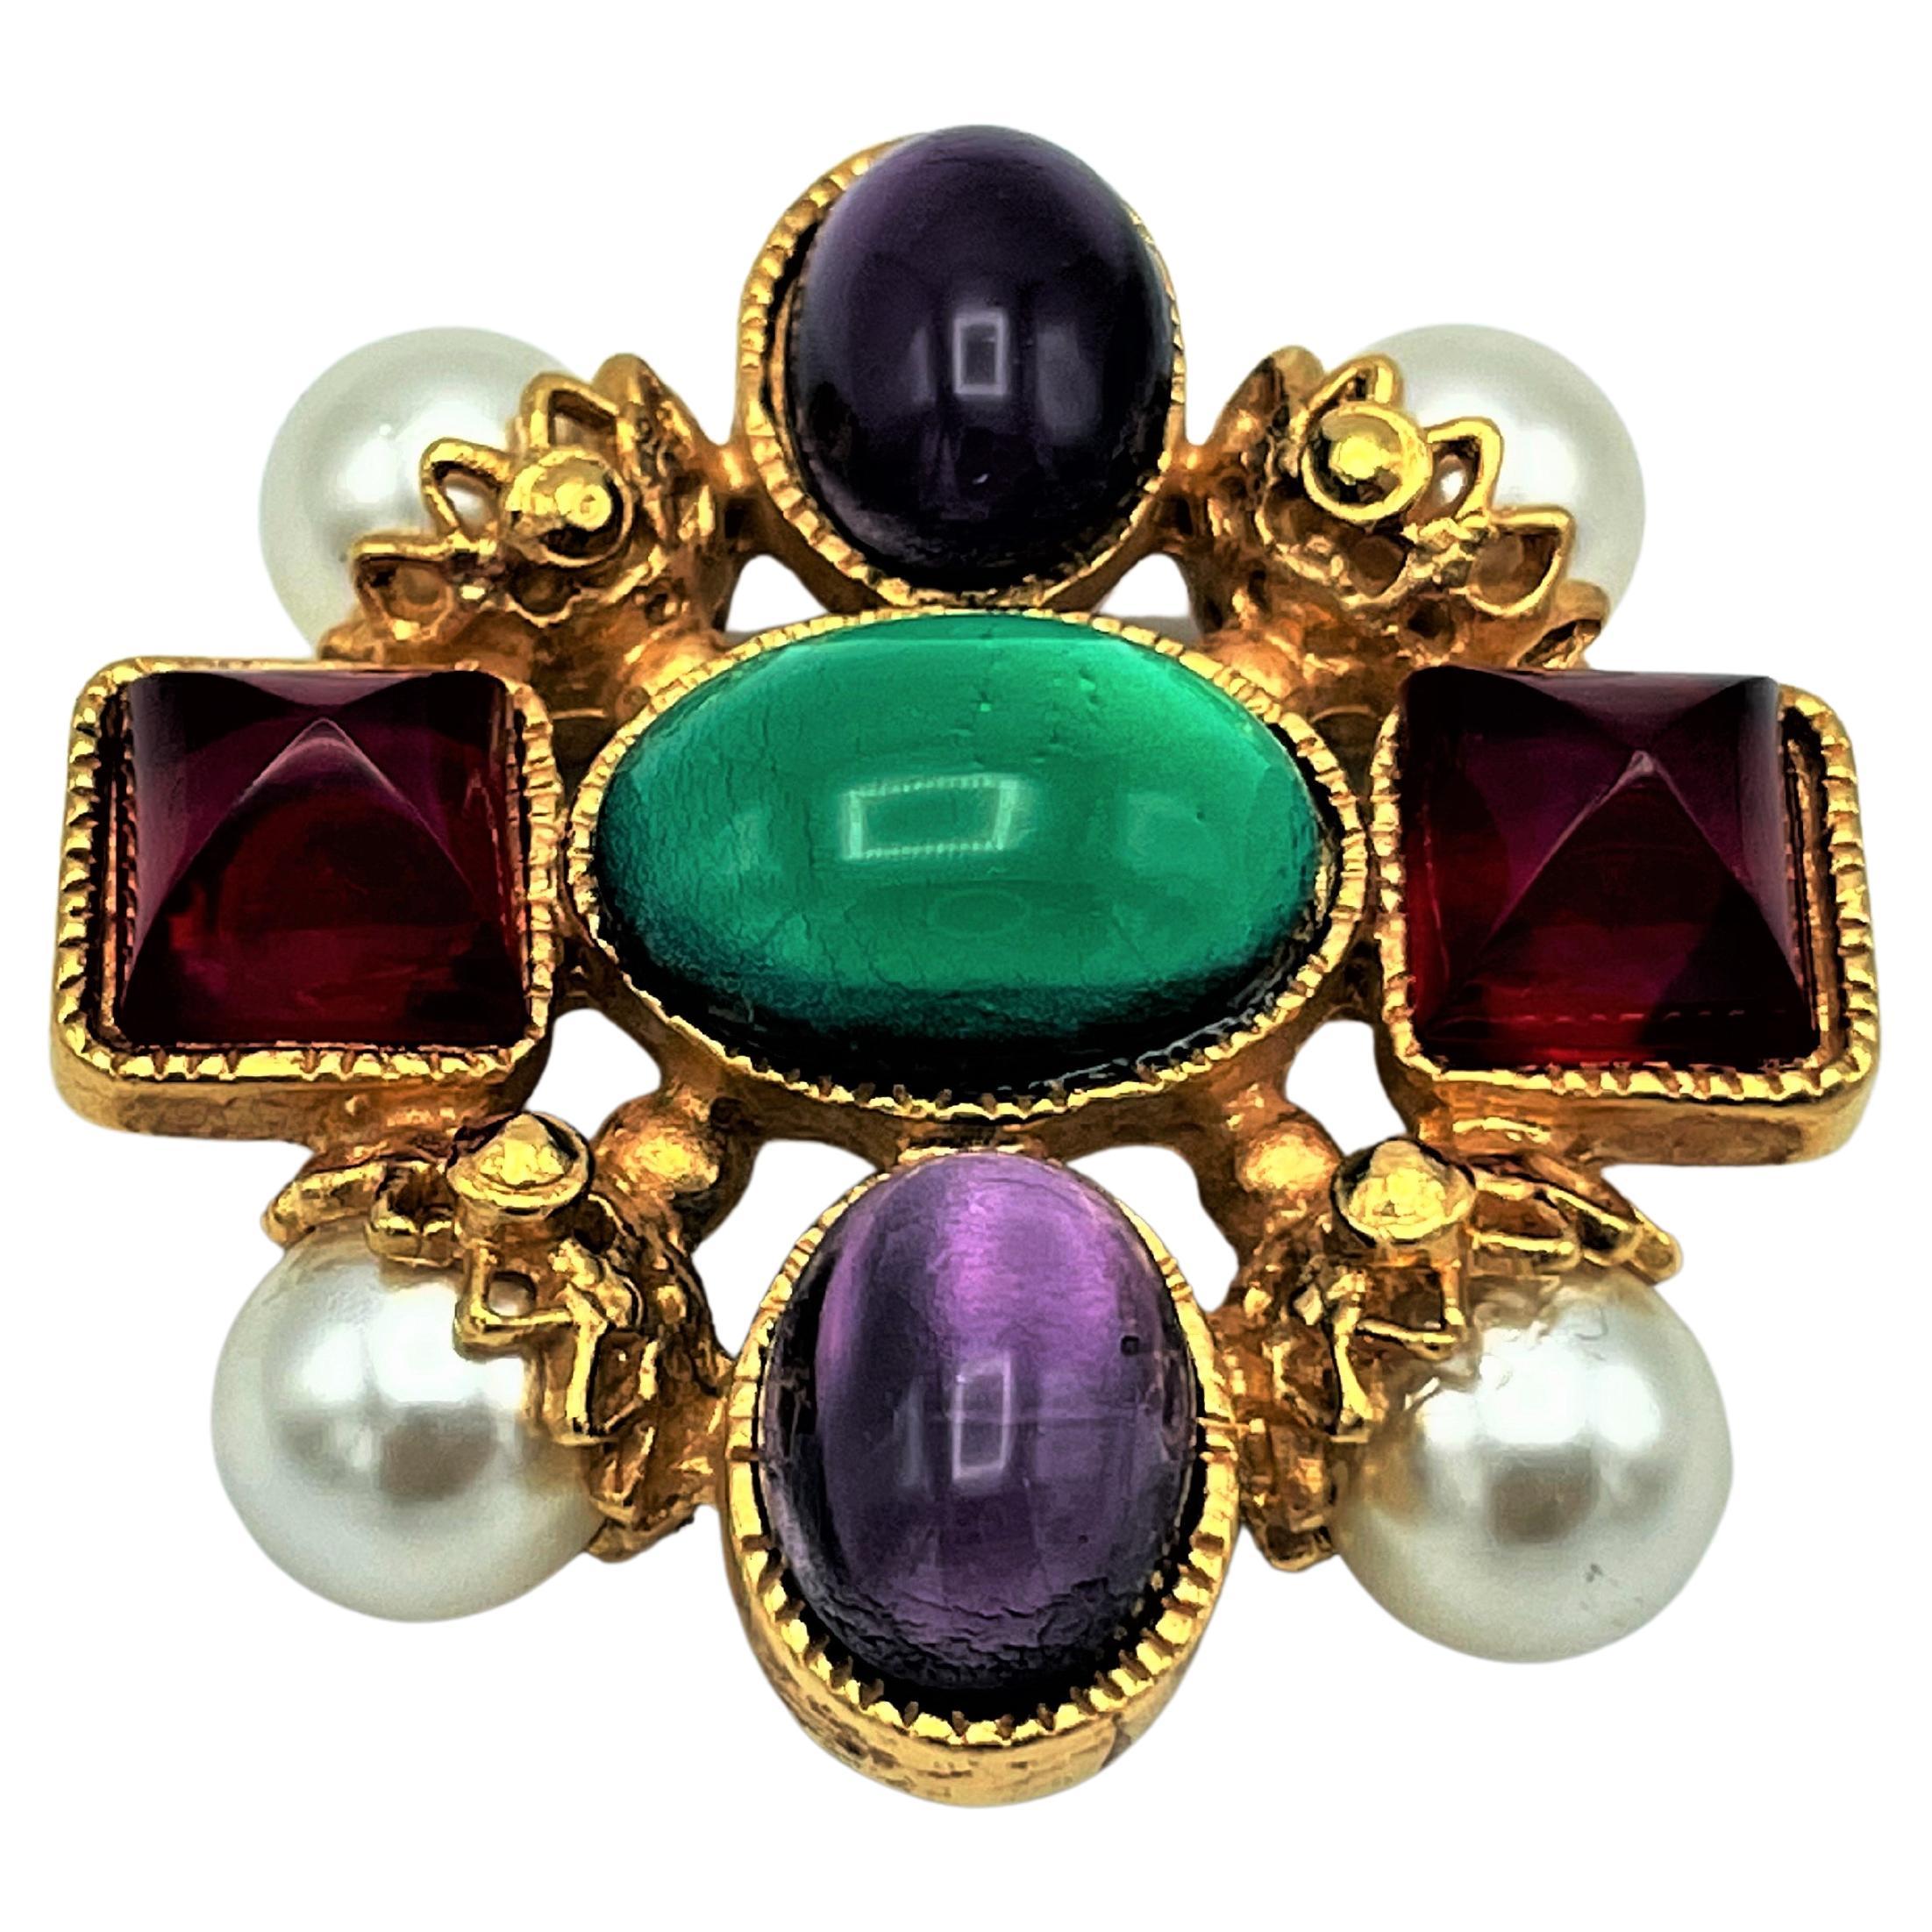 Chanel brooch or pendant par Gripoix Paris, signed 2007 A, gold plated 